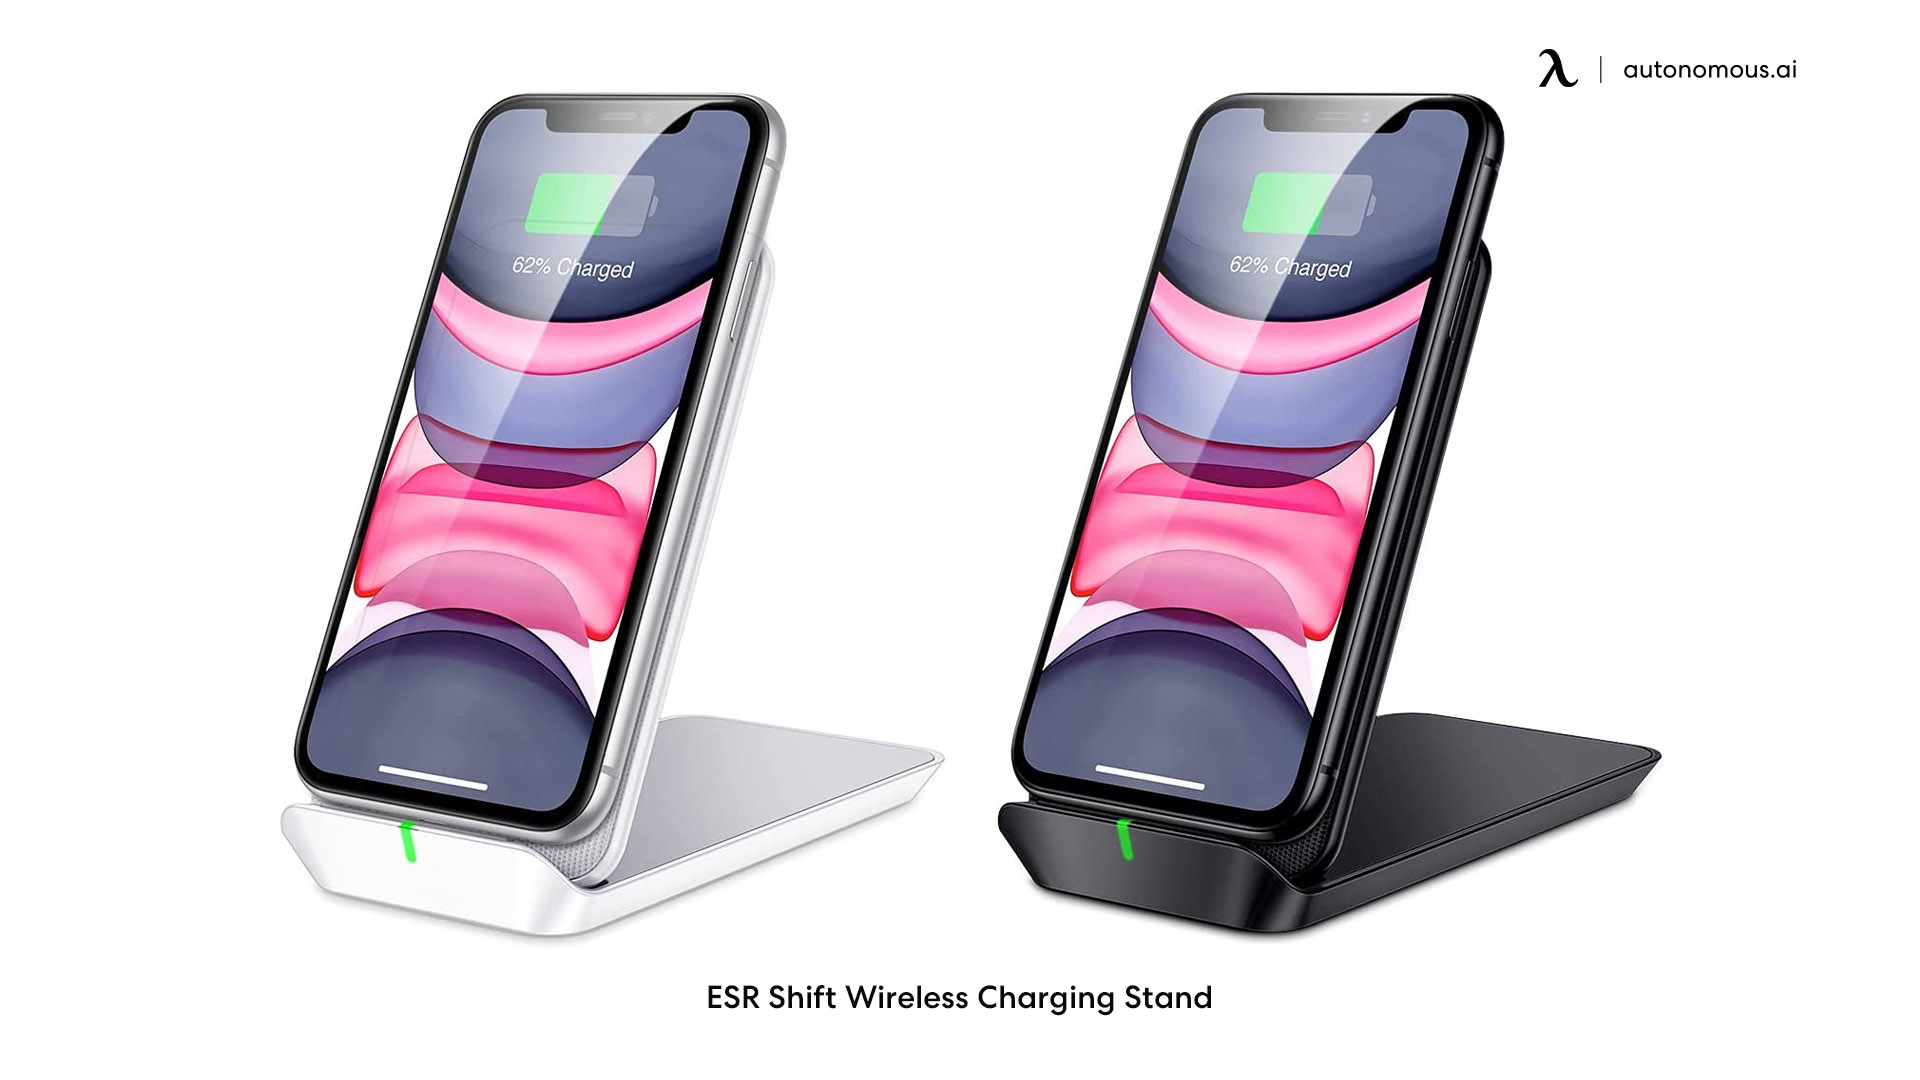 ESR Shift Wireless Charging Stand